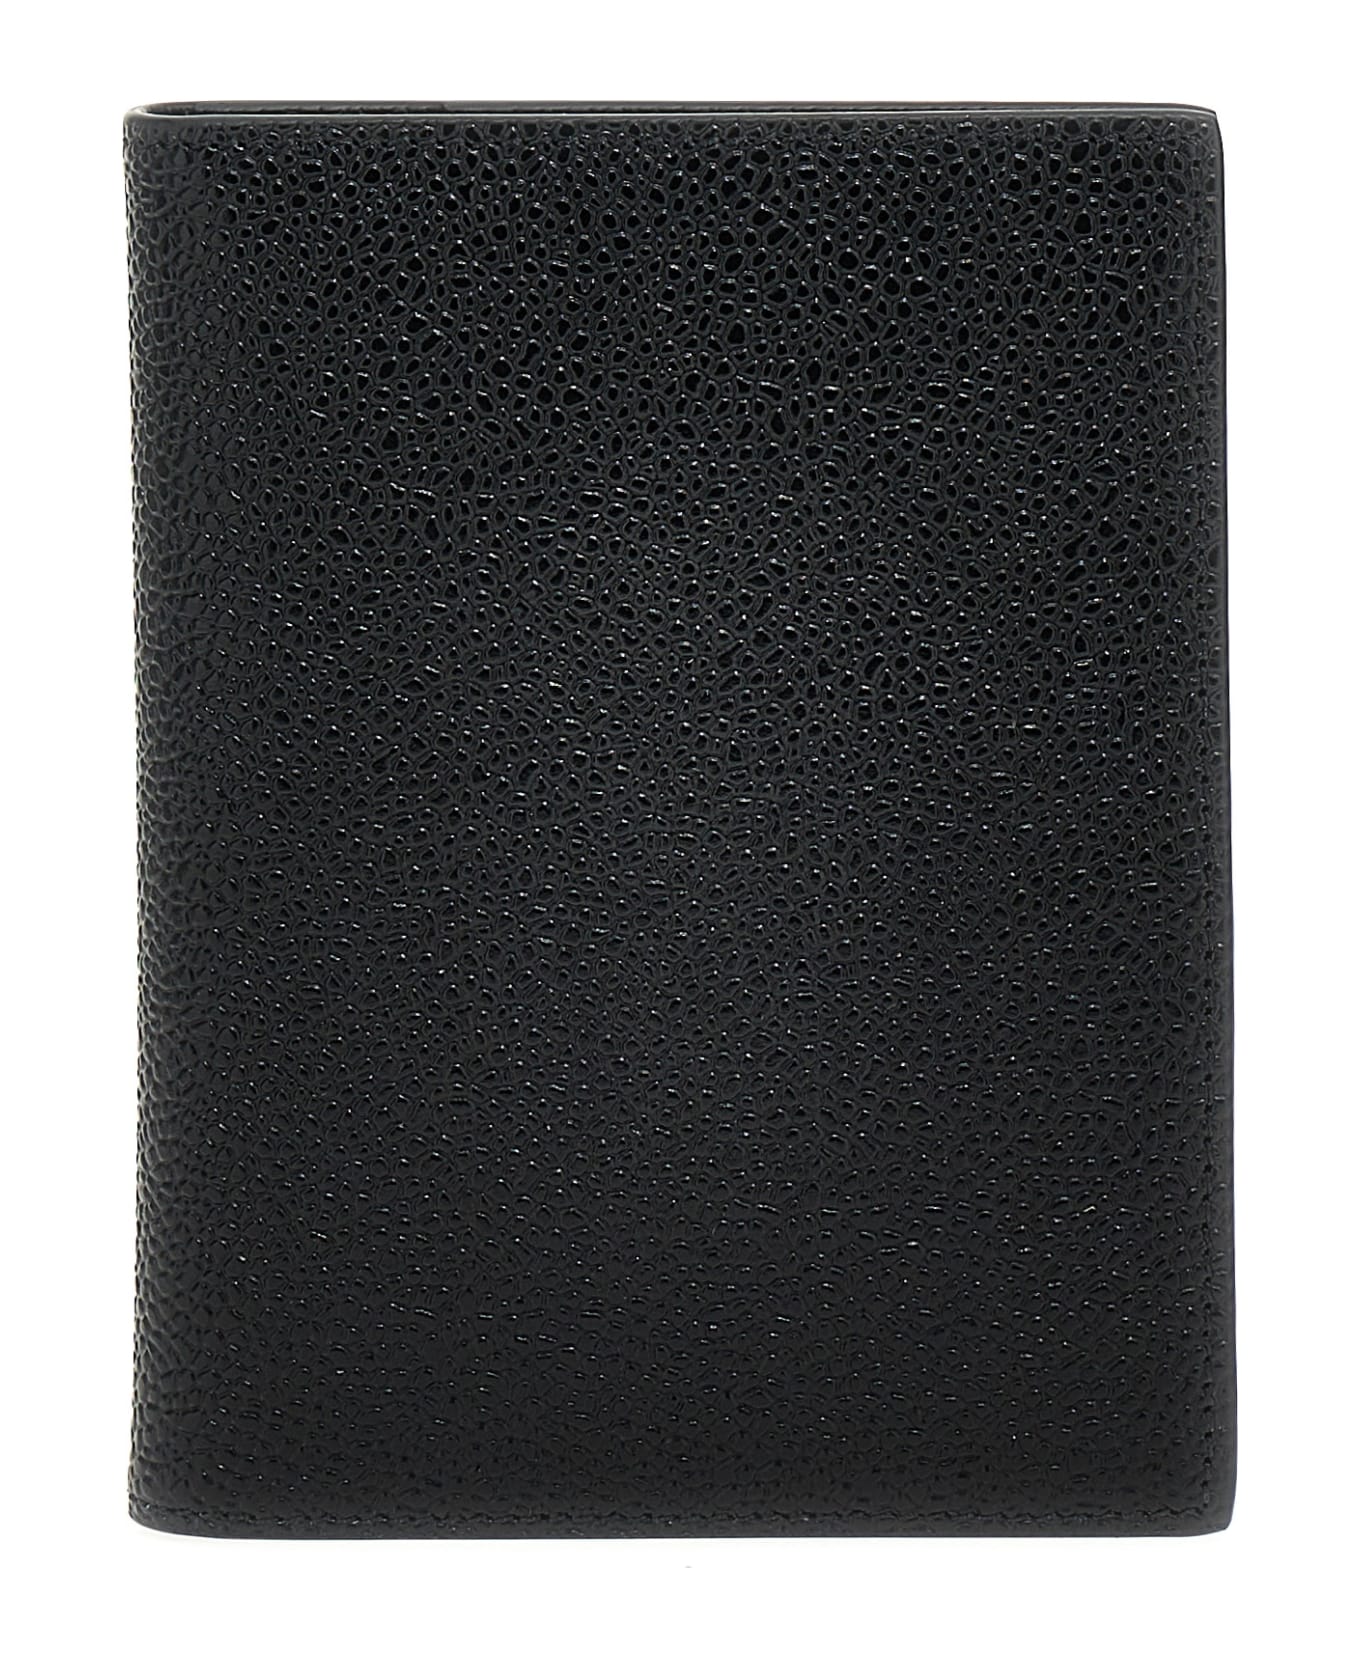 Thom Browne Passport Holder In Pebble Grain - Black 財布